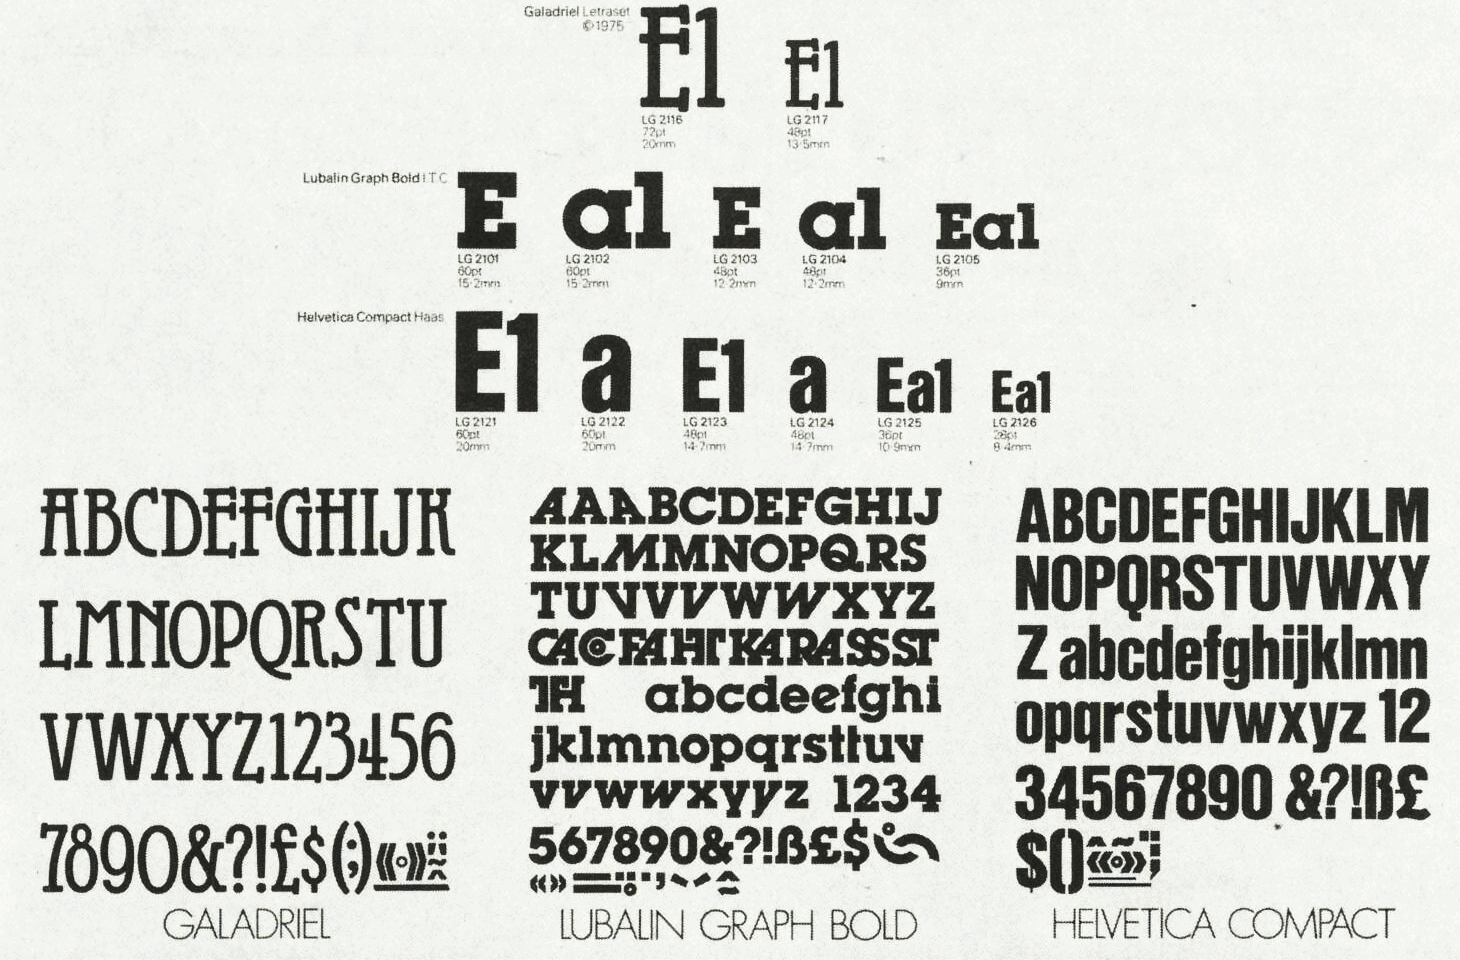 helvetica-compact-letragraphica